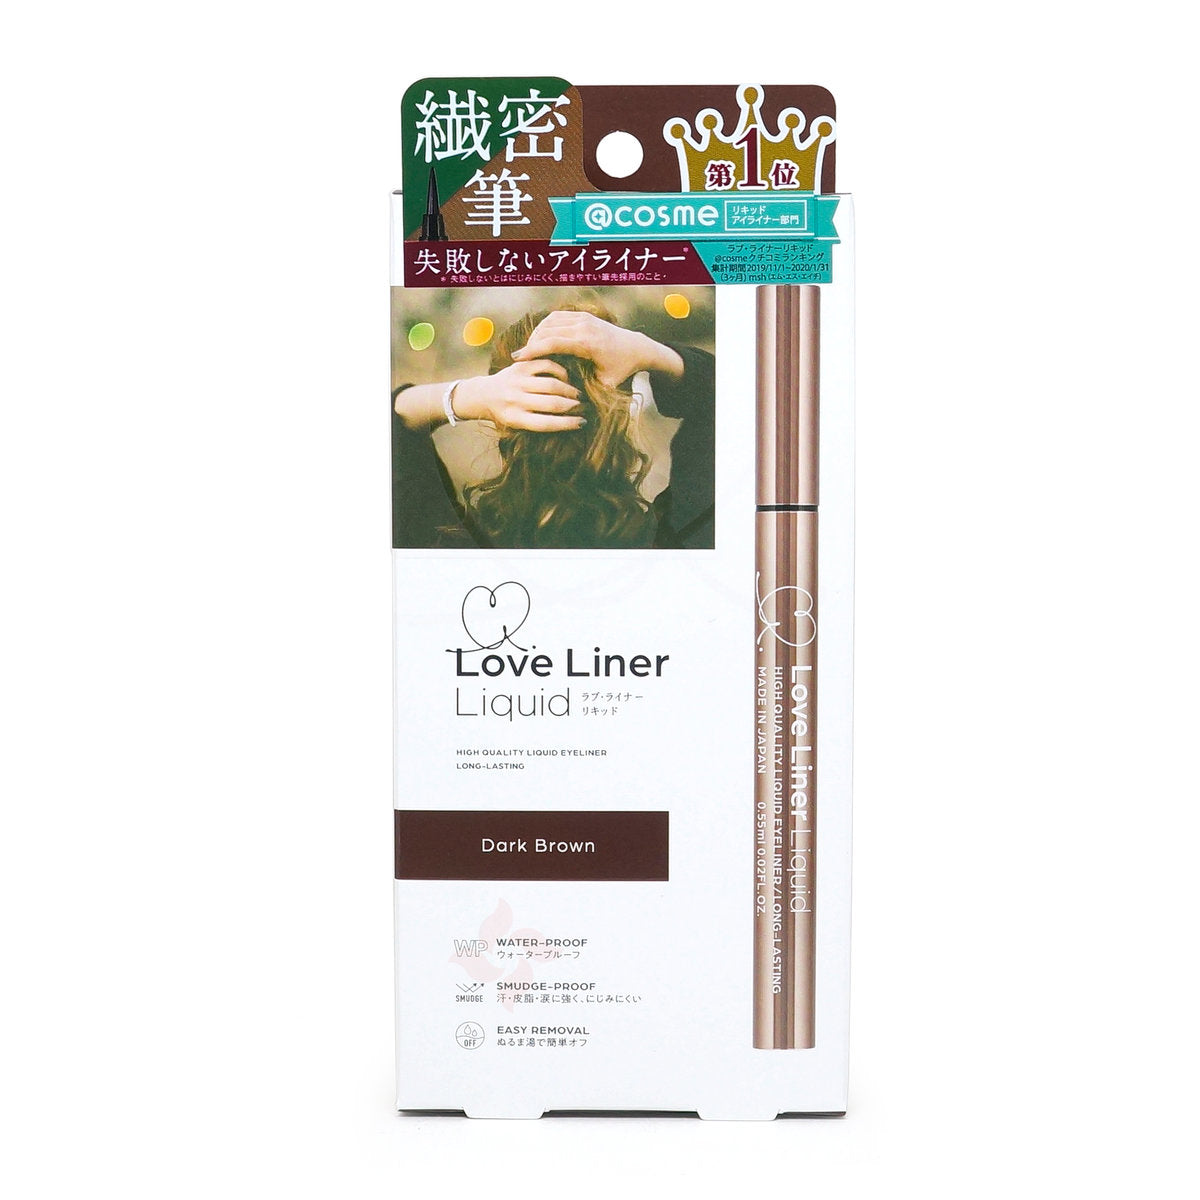 Love Liner liquid eyeliner #dark brown